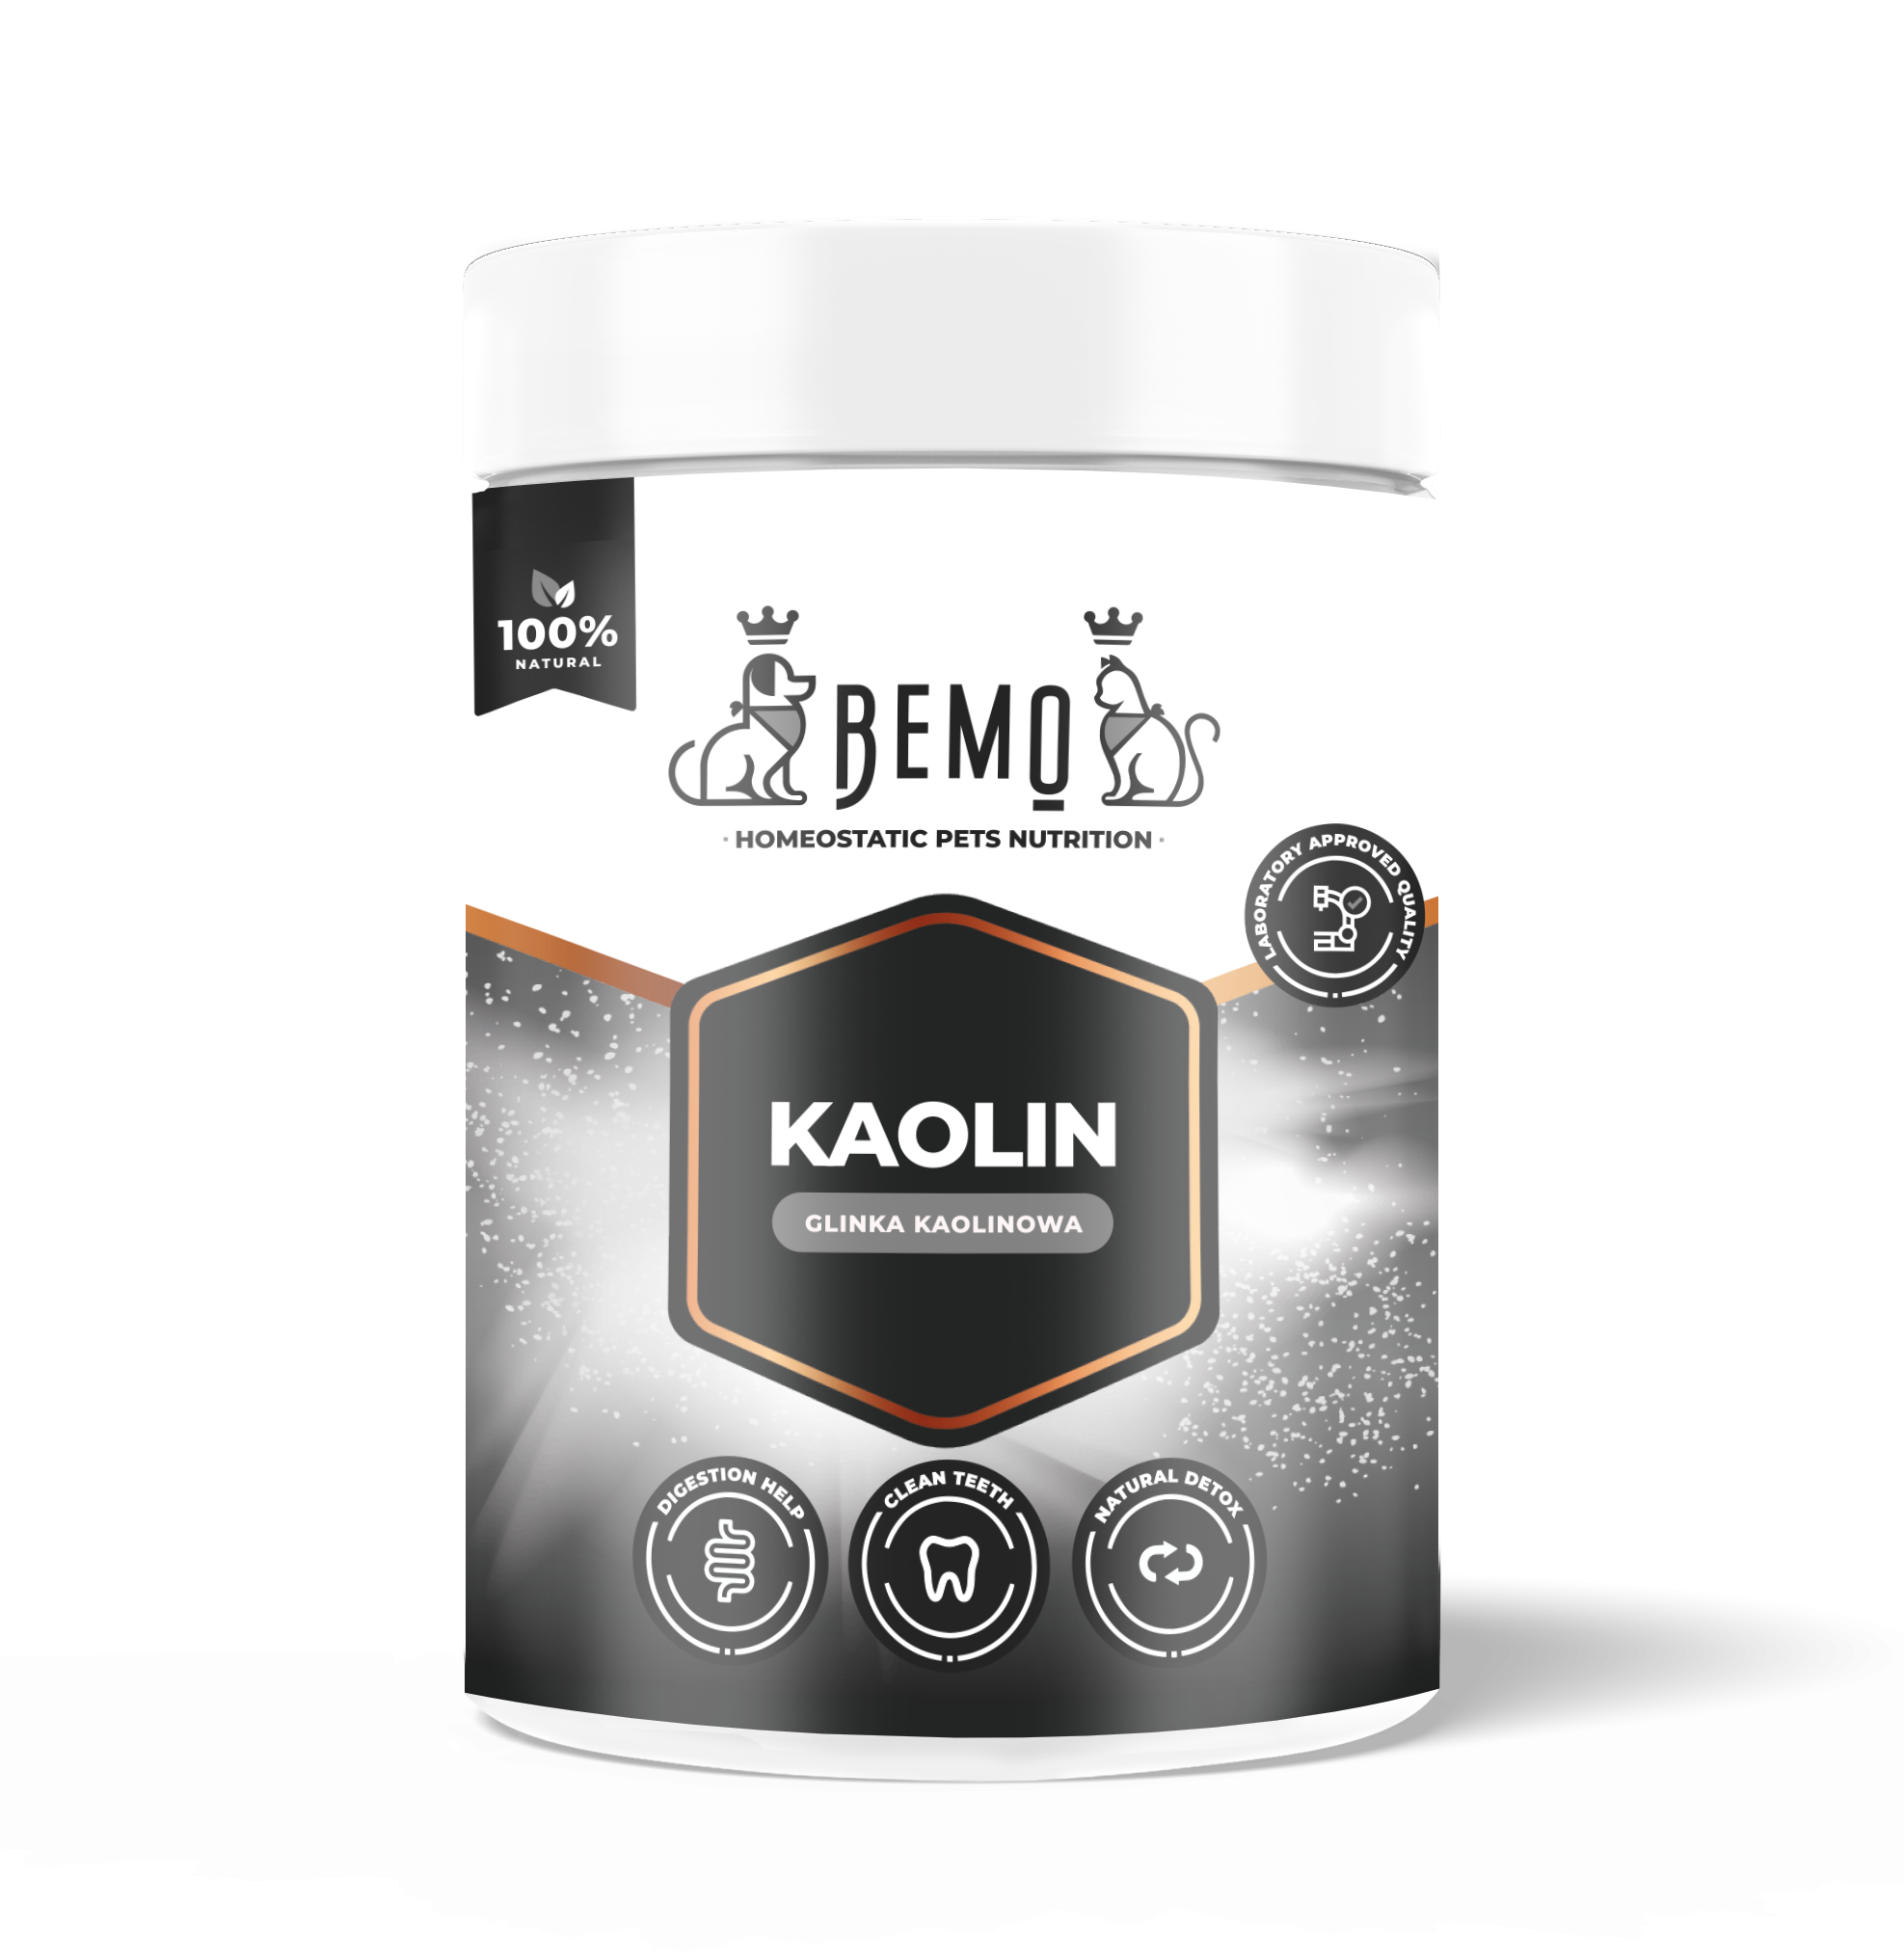 Bemo Kaolin - glinka kaolinowa dla psa i kota